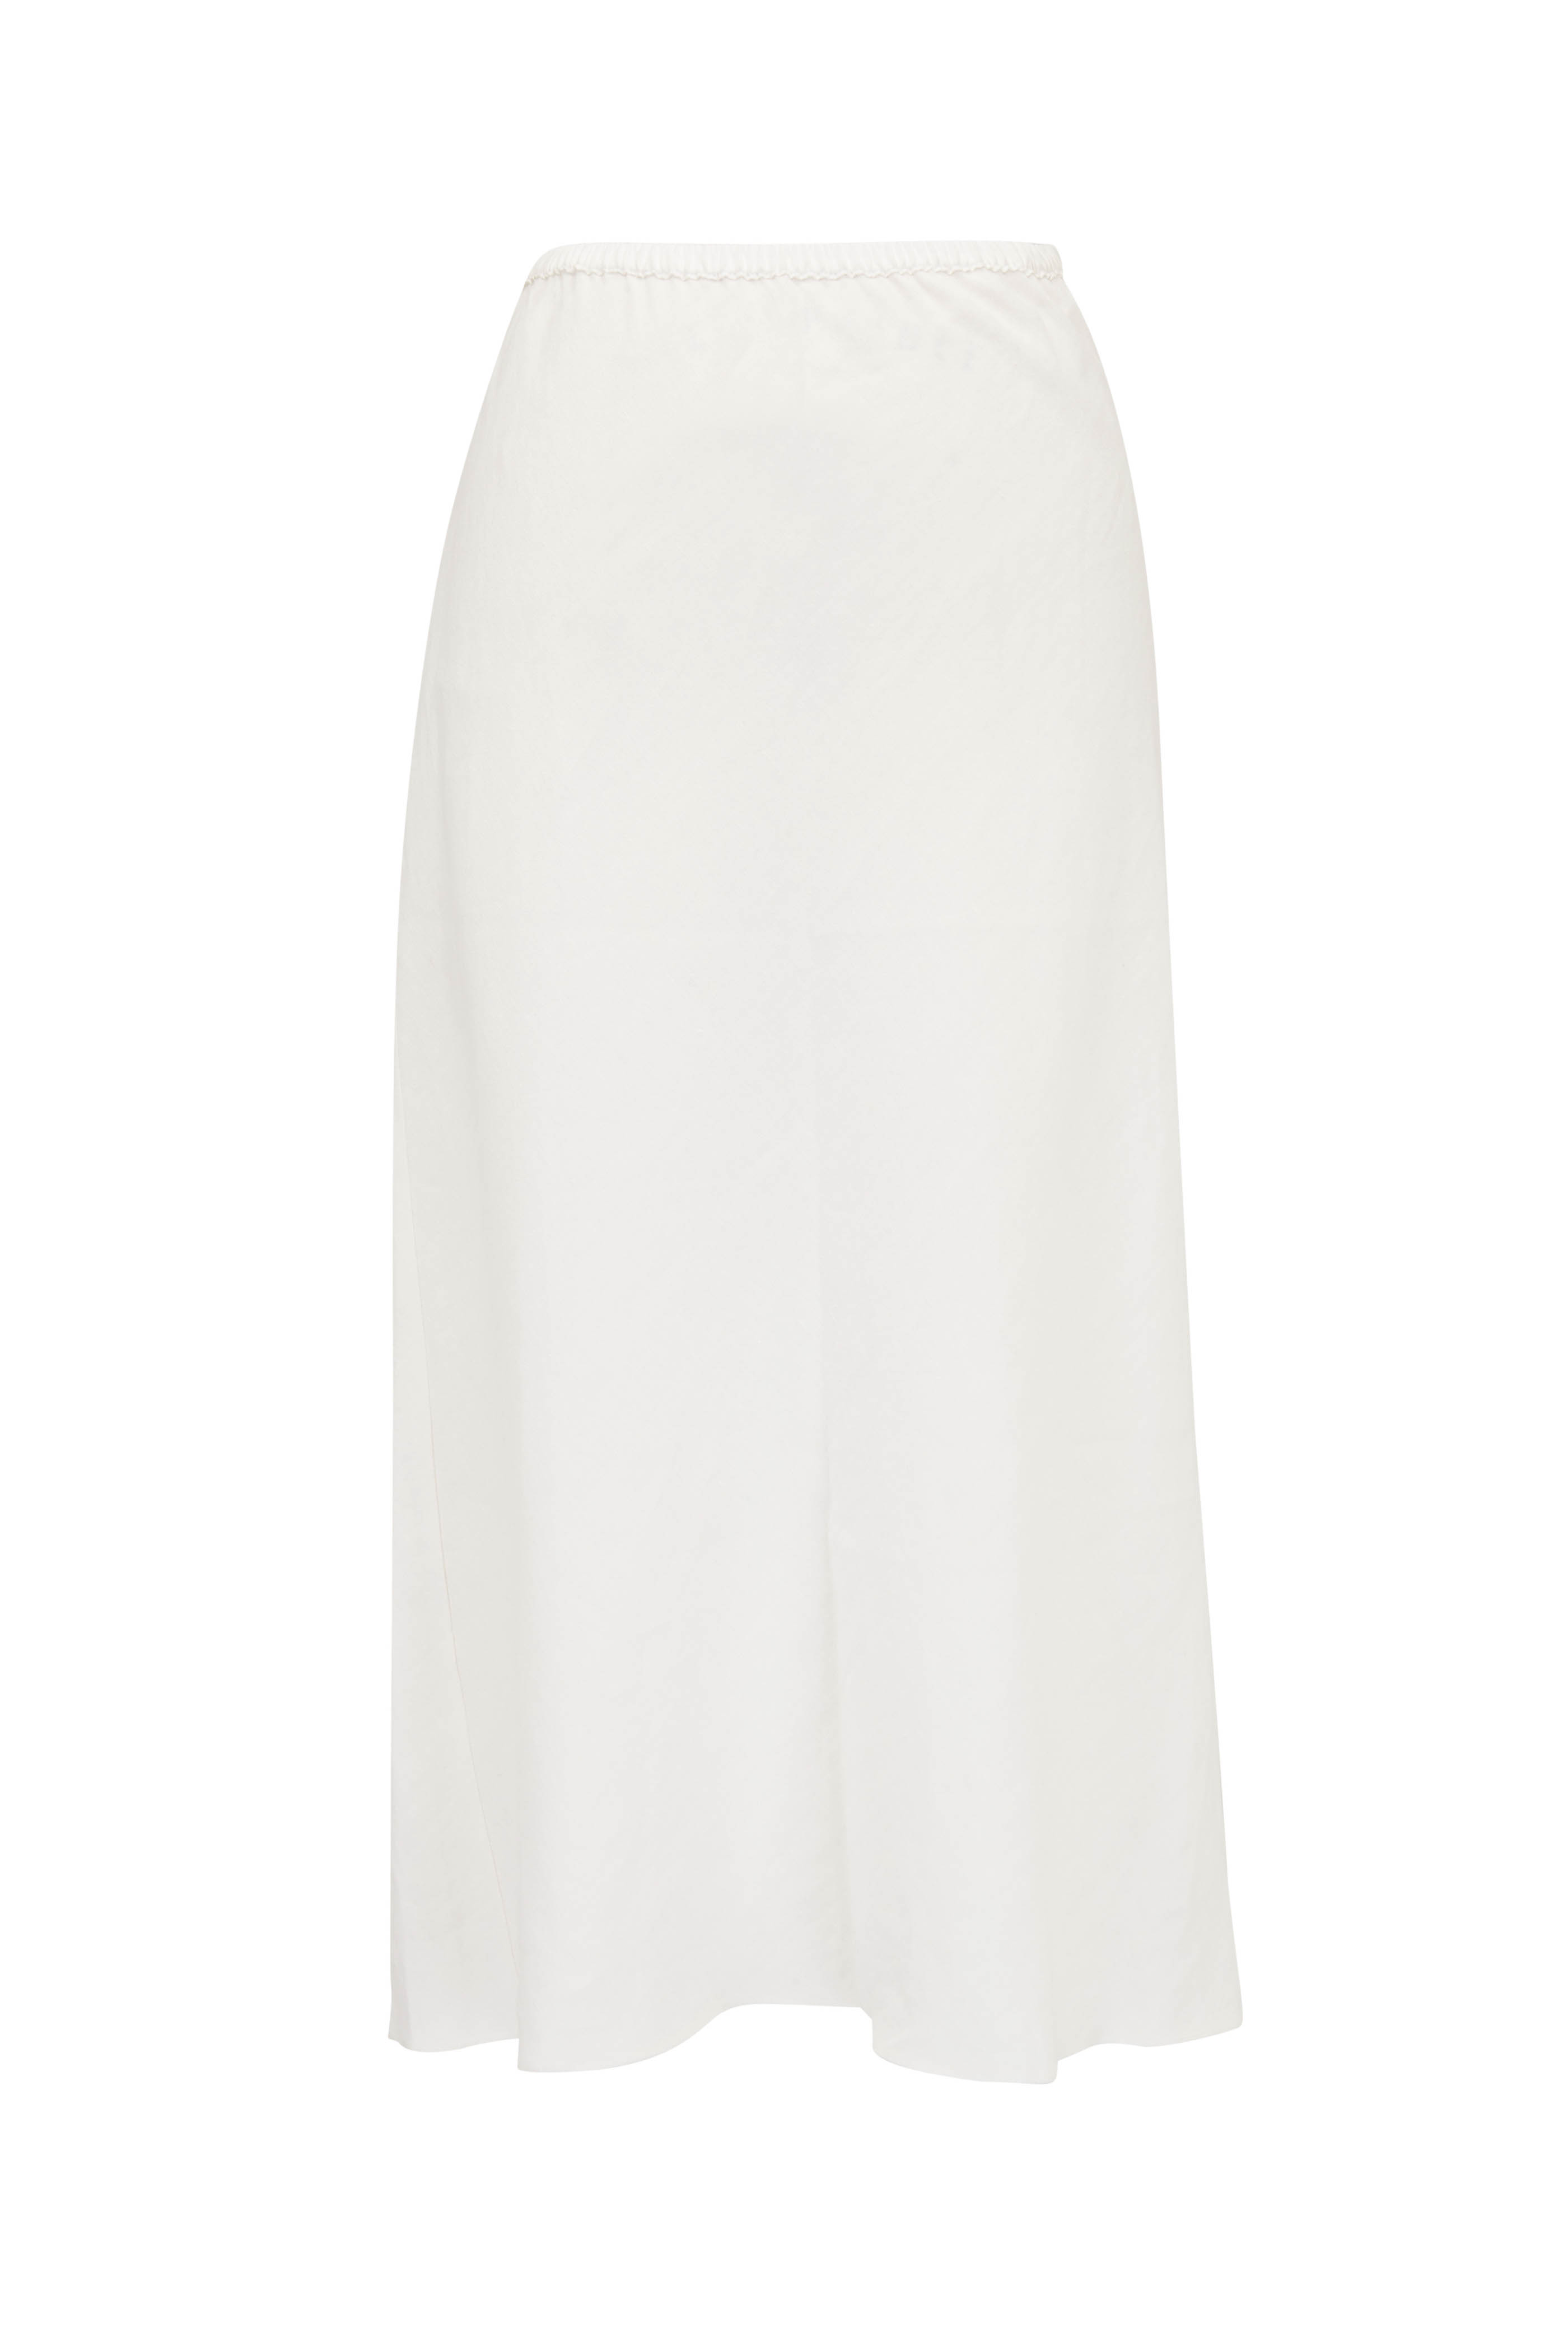 Skirt | Midi Mitchell Plisse D.Exterior Gray - Stores Wool